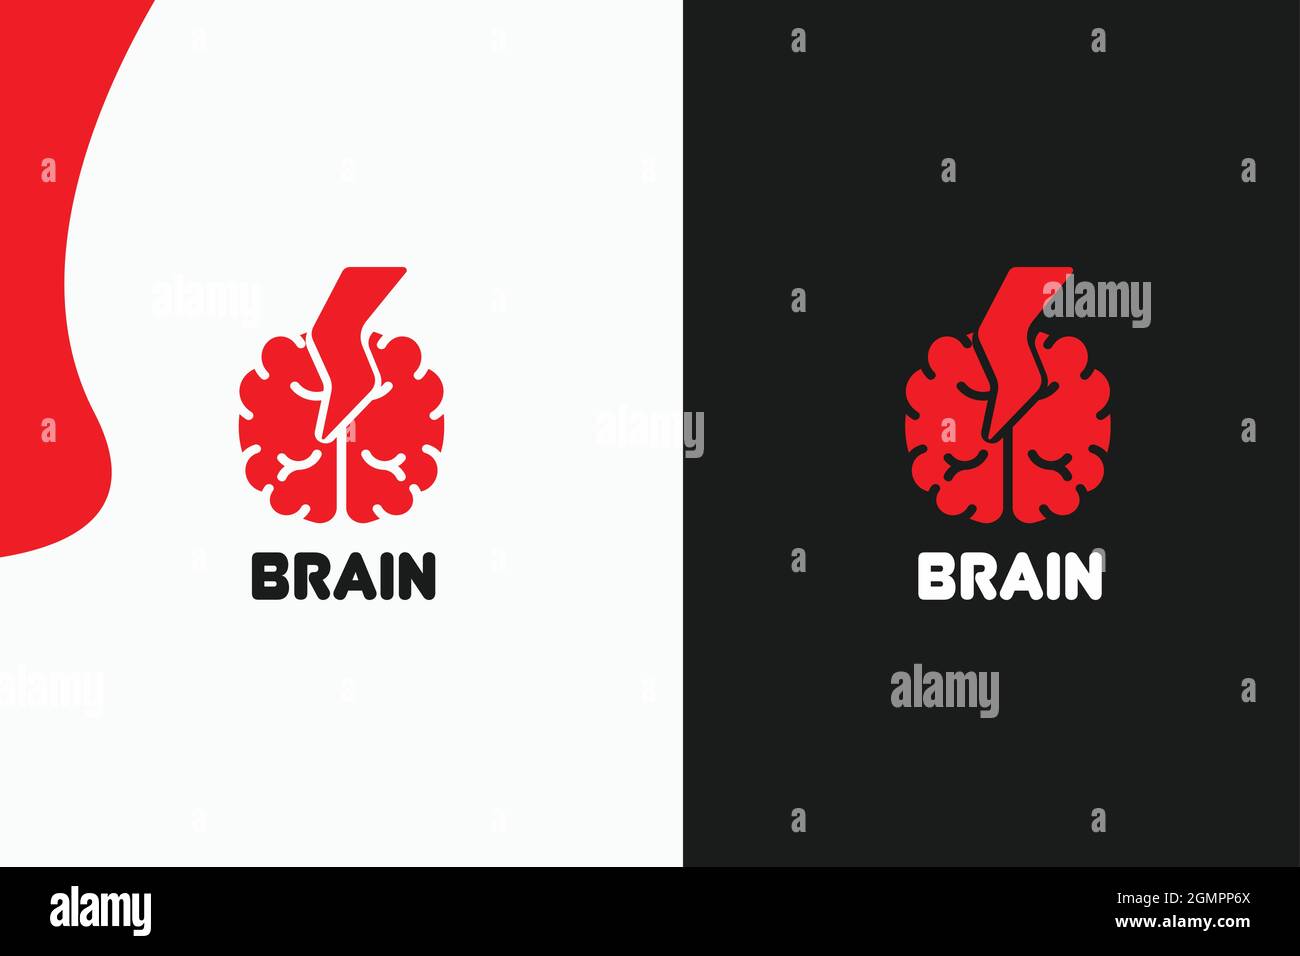 Modernes Gehirn mit Bolt-Logo-Design und Vektorgrafik-Logo Stock Vektor